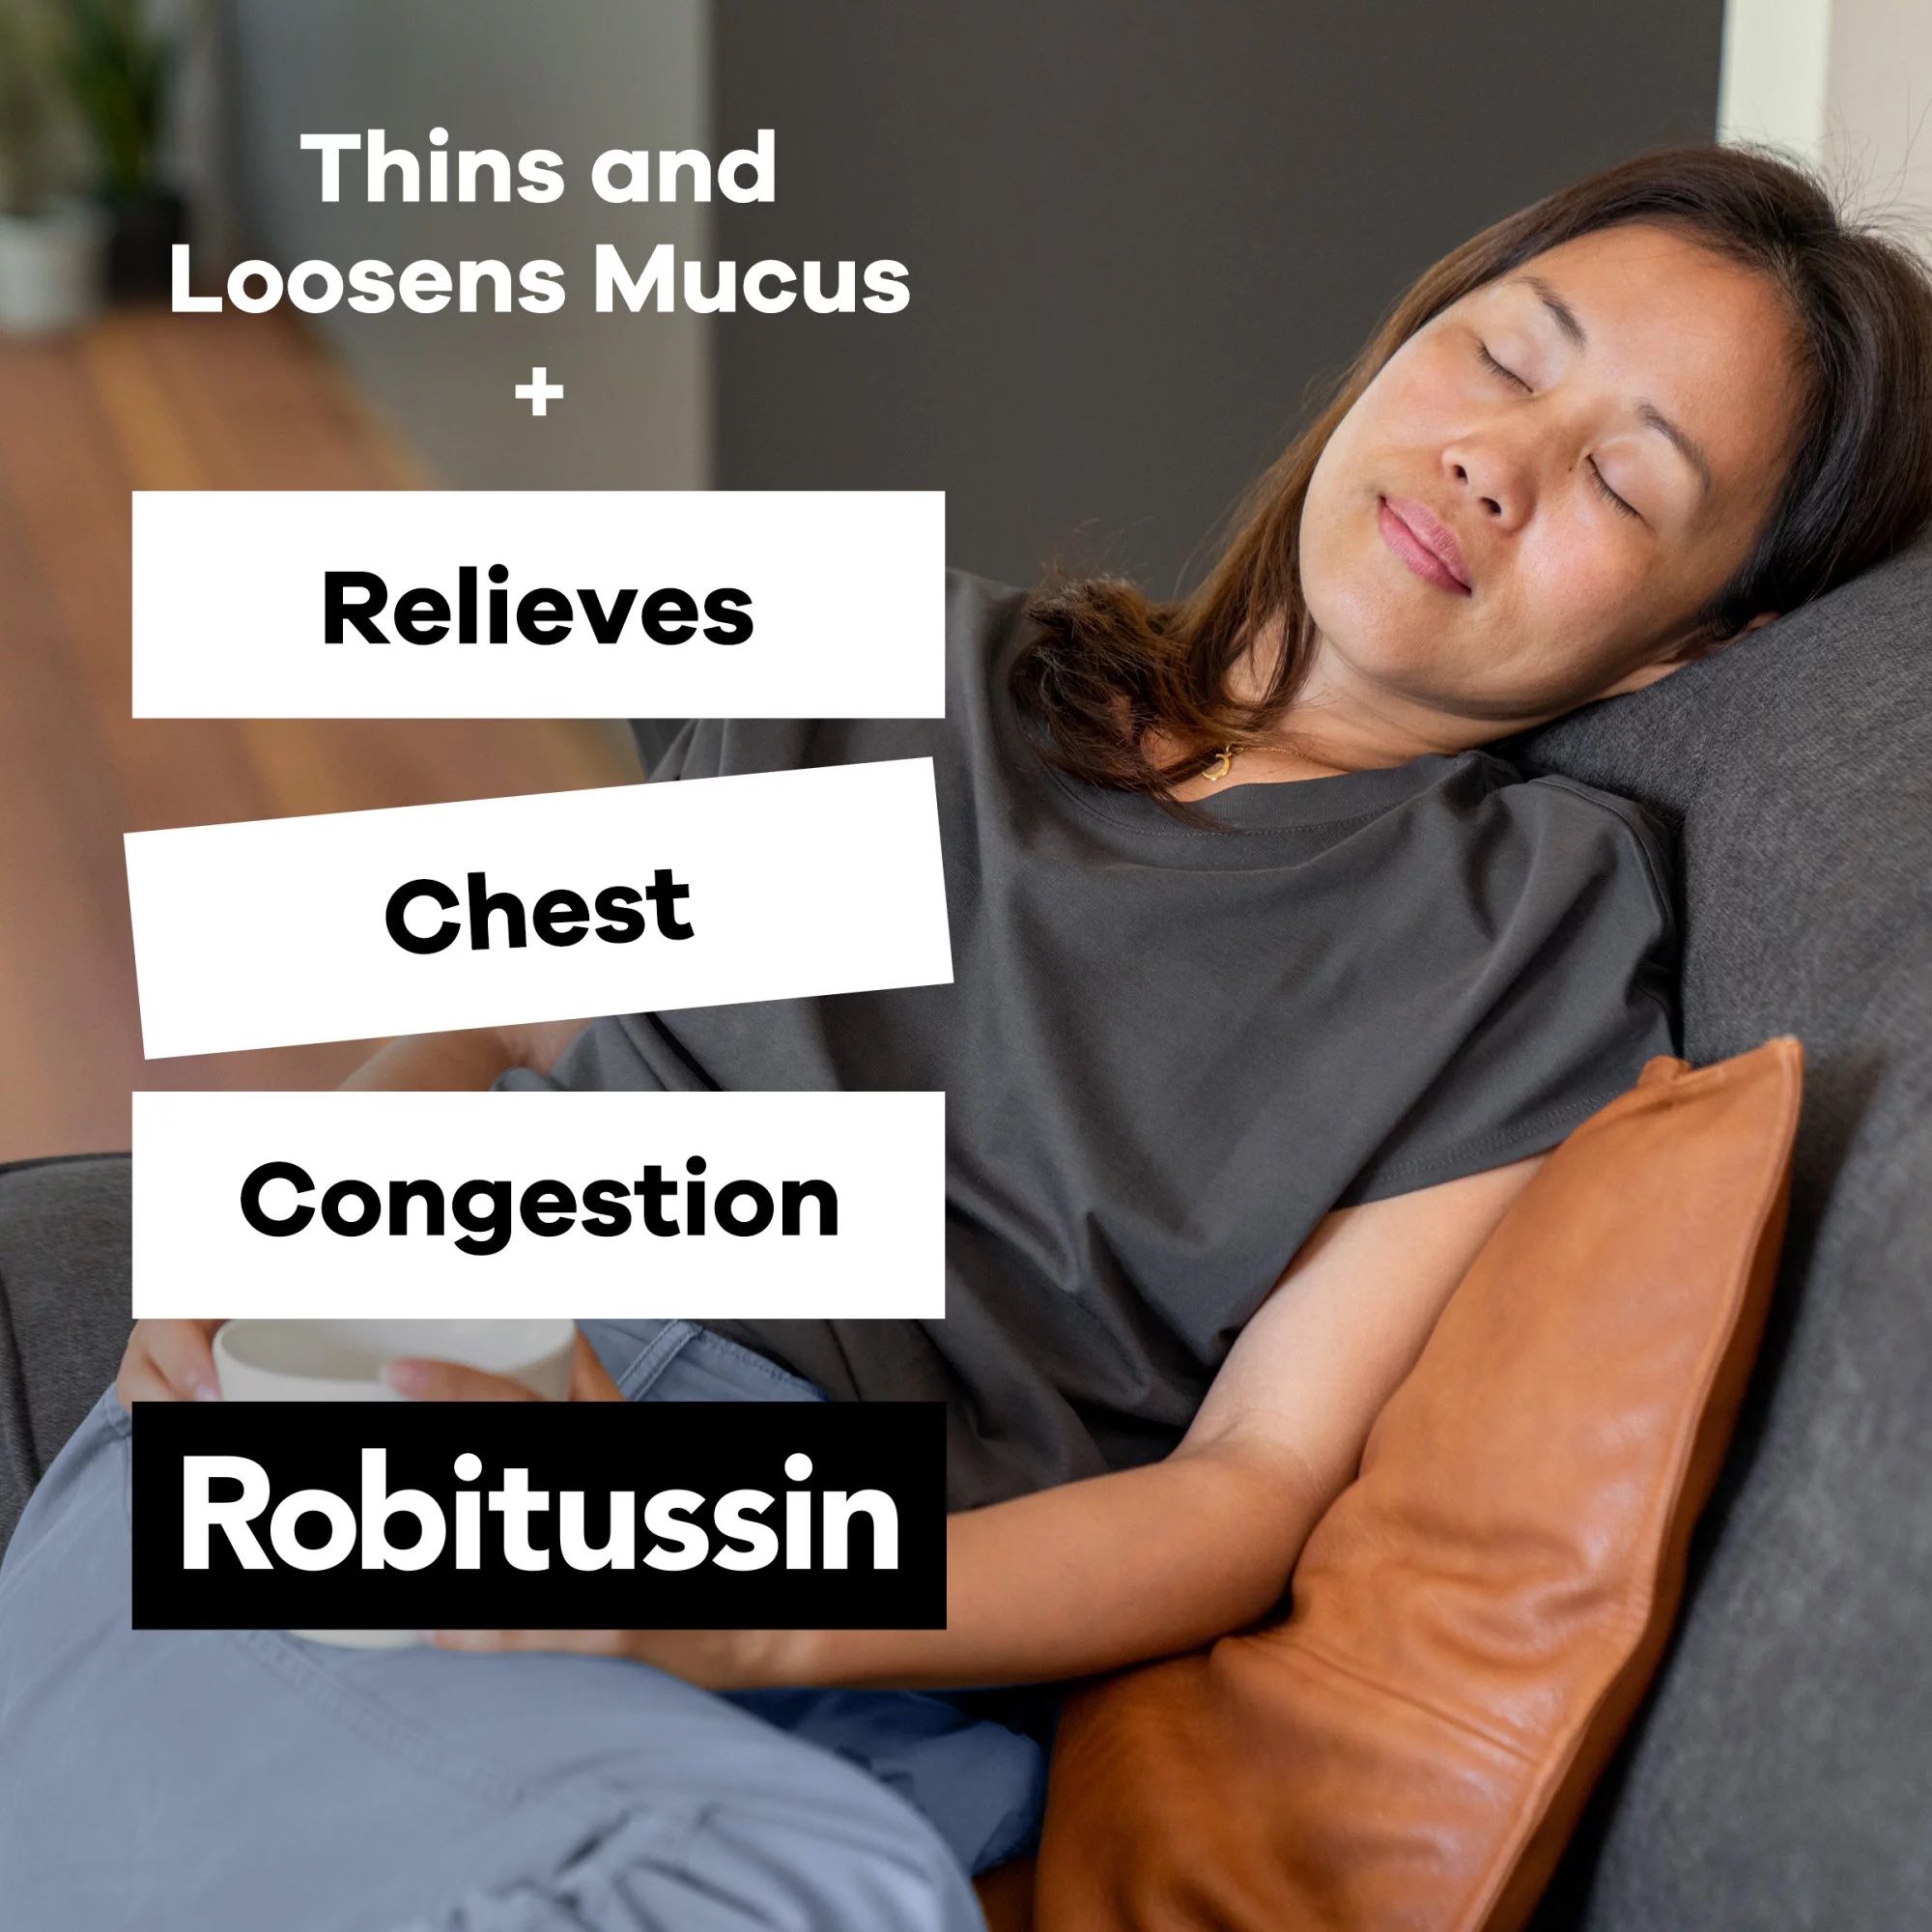 Robitussin Adult Cough + Chest Congestion DM Liquid, Maximum Strength -  4 fl oz